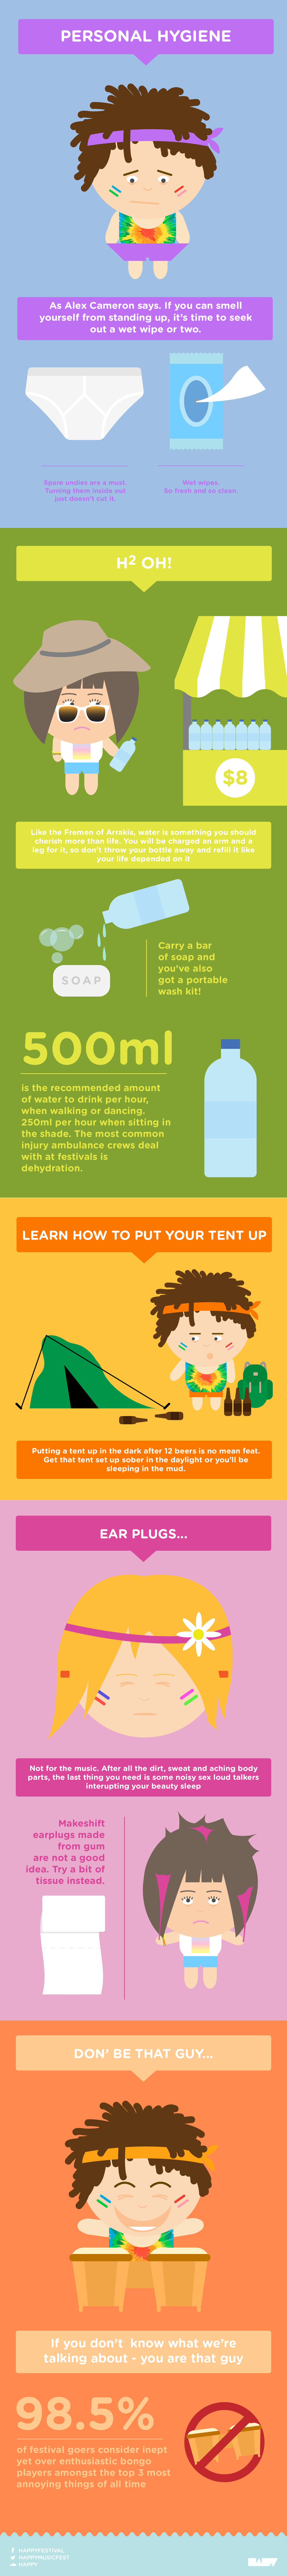 Festival Survival guide